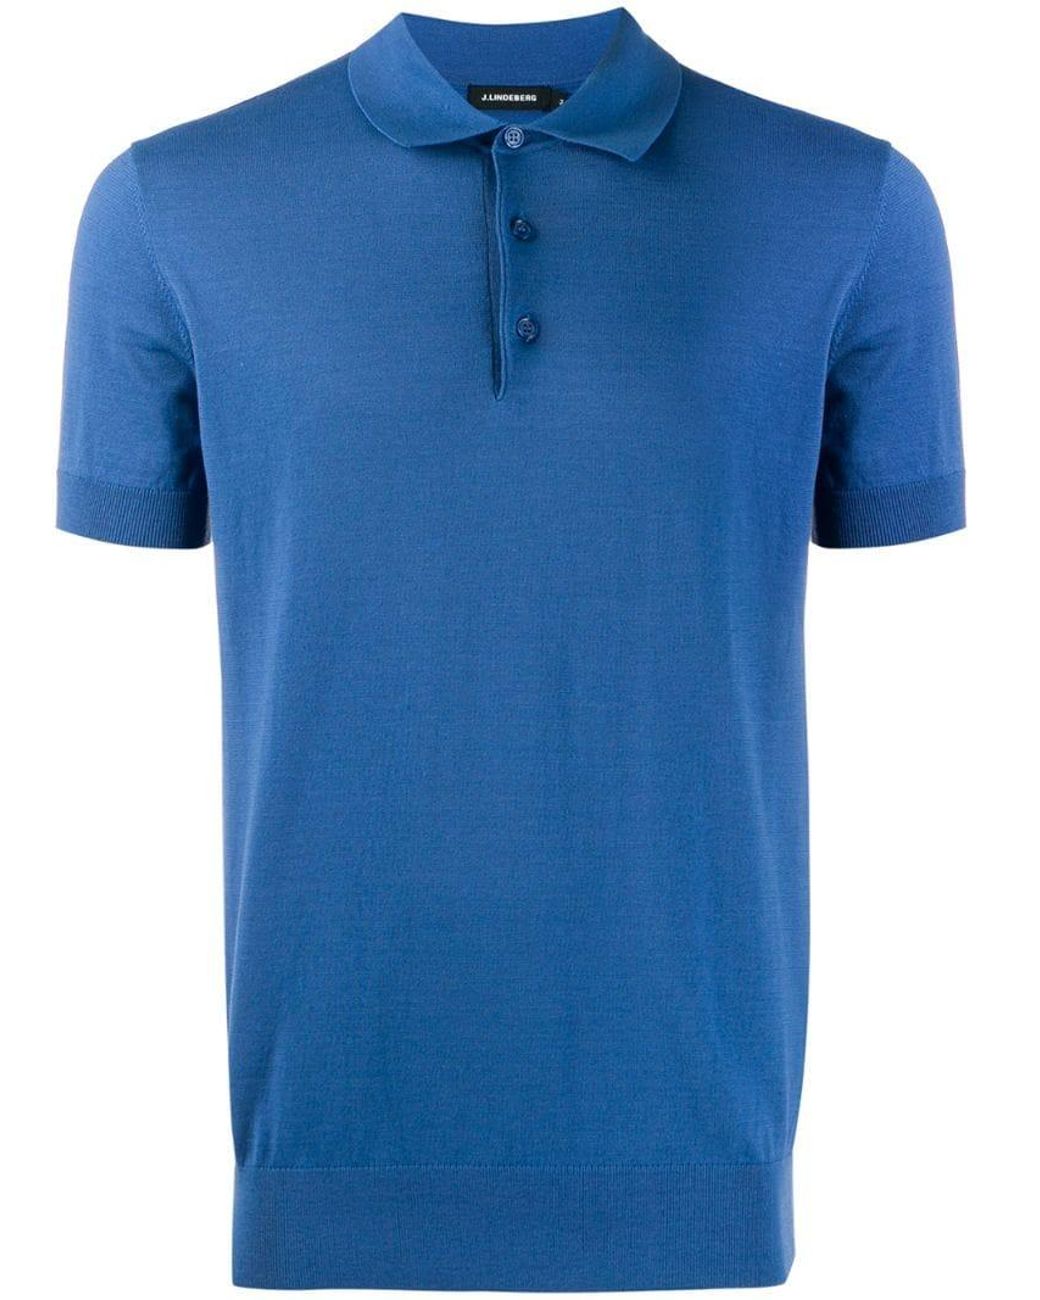 J.Lindeberg Slim-fit Polo Shirt in Blue for Men - Lyst